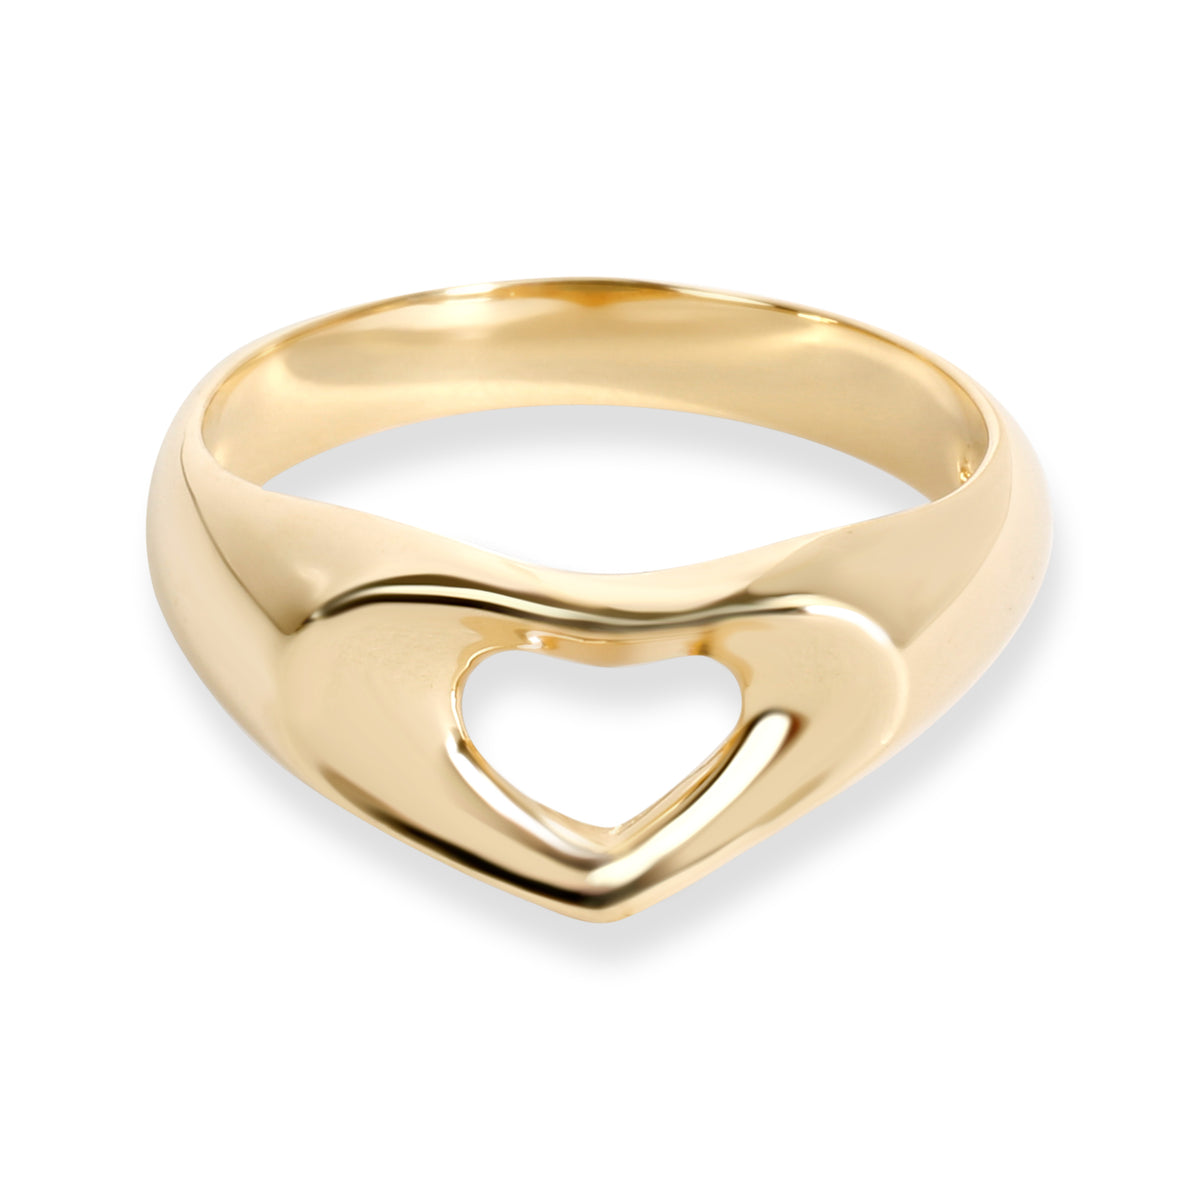 Tiffany & Co. Open Heart Signet Ring in 18K Yellow Gold